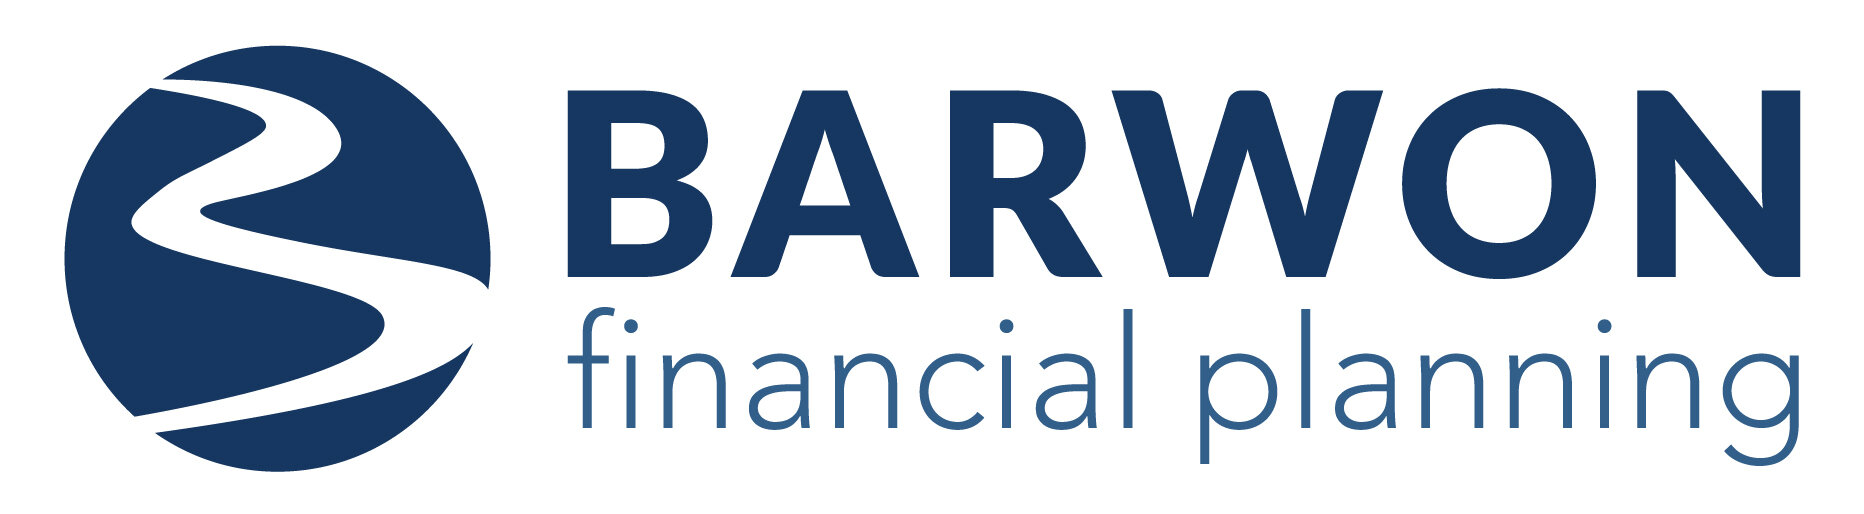 barwon-financial-planning_logo-01.jpg